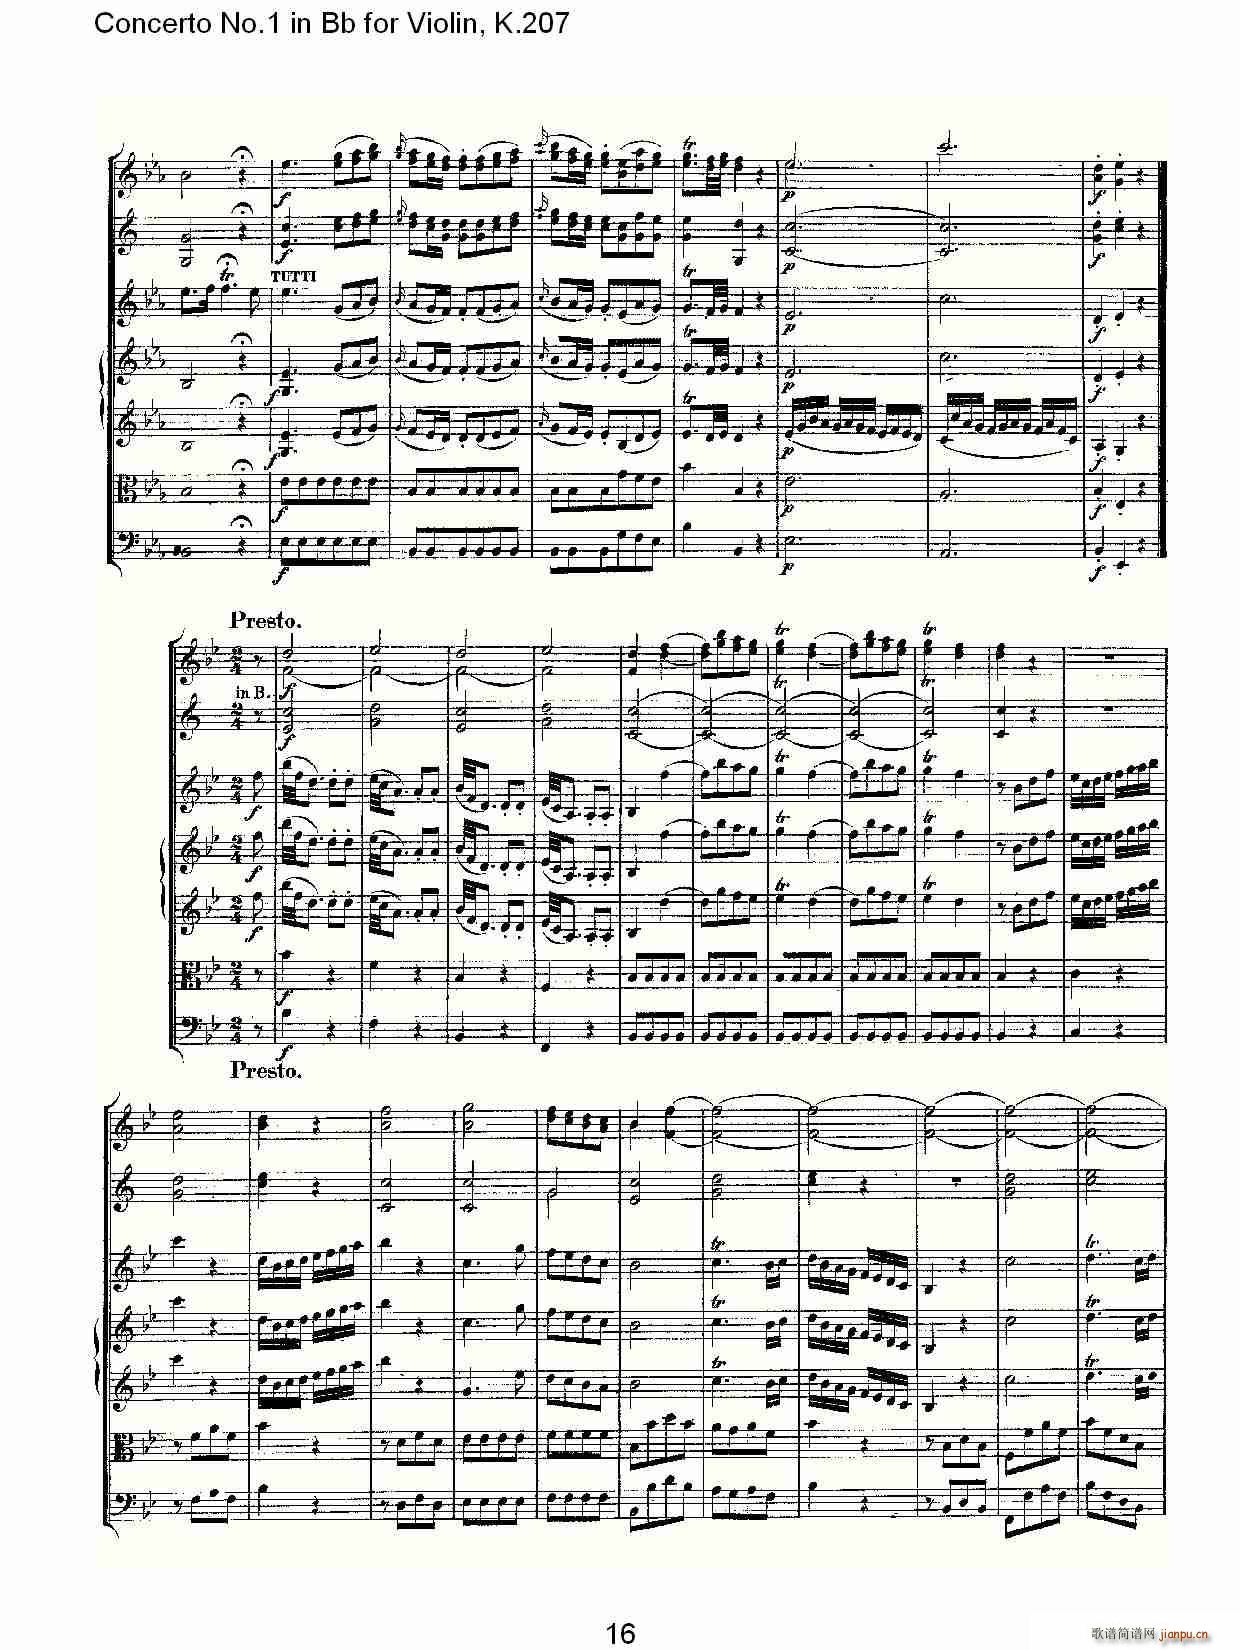 Concerto No.1 in Bb for Violin, K.207(С)16